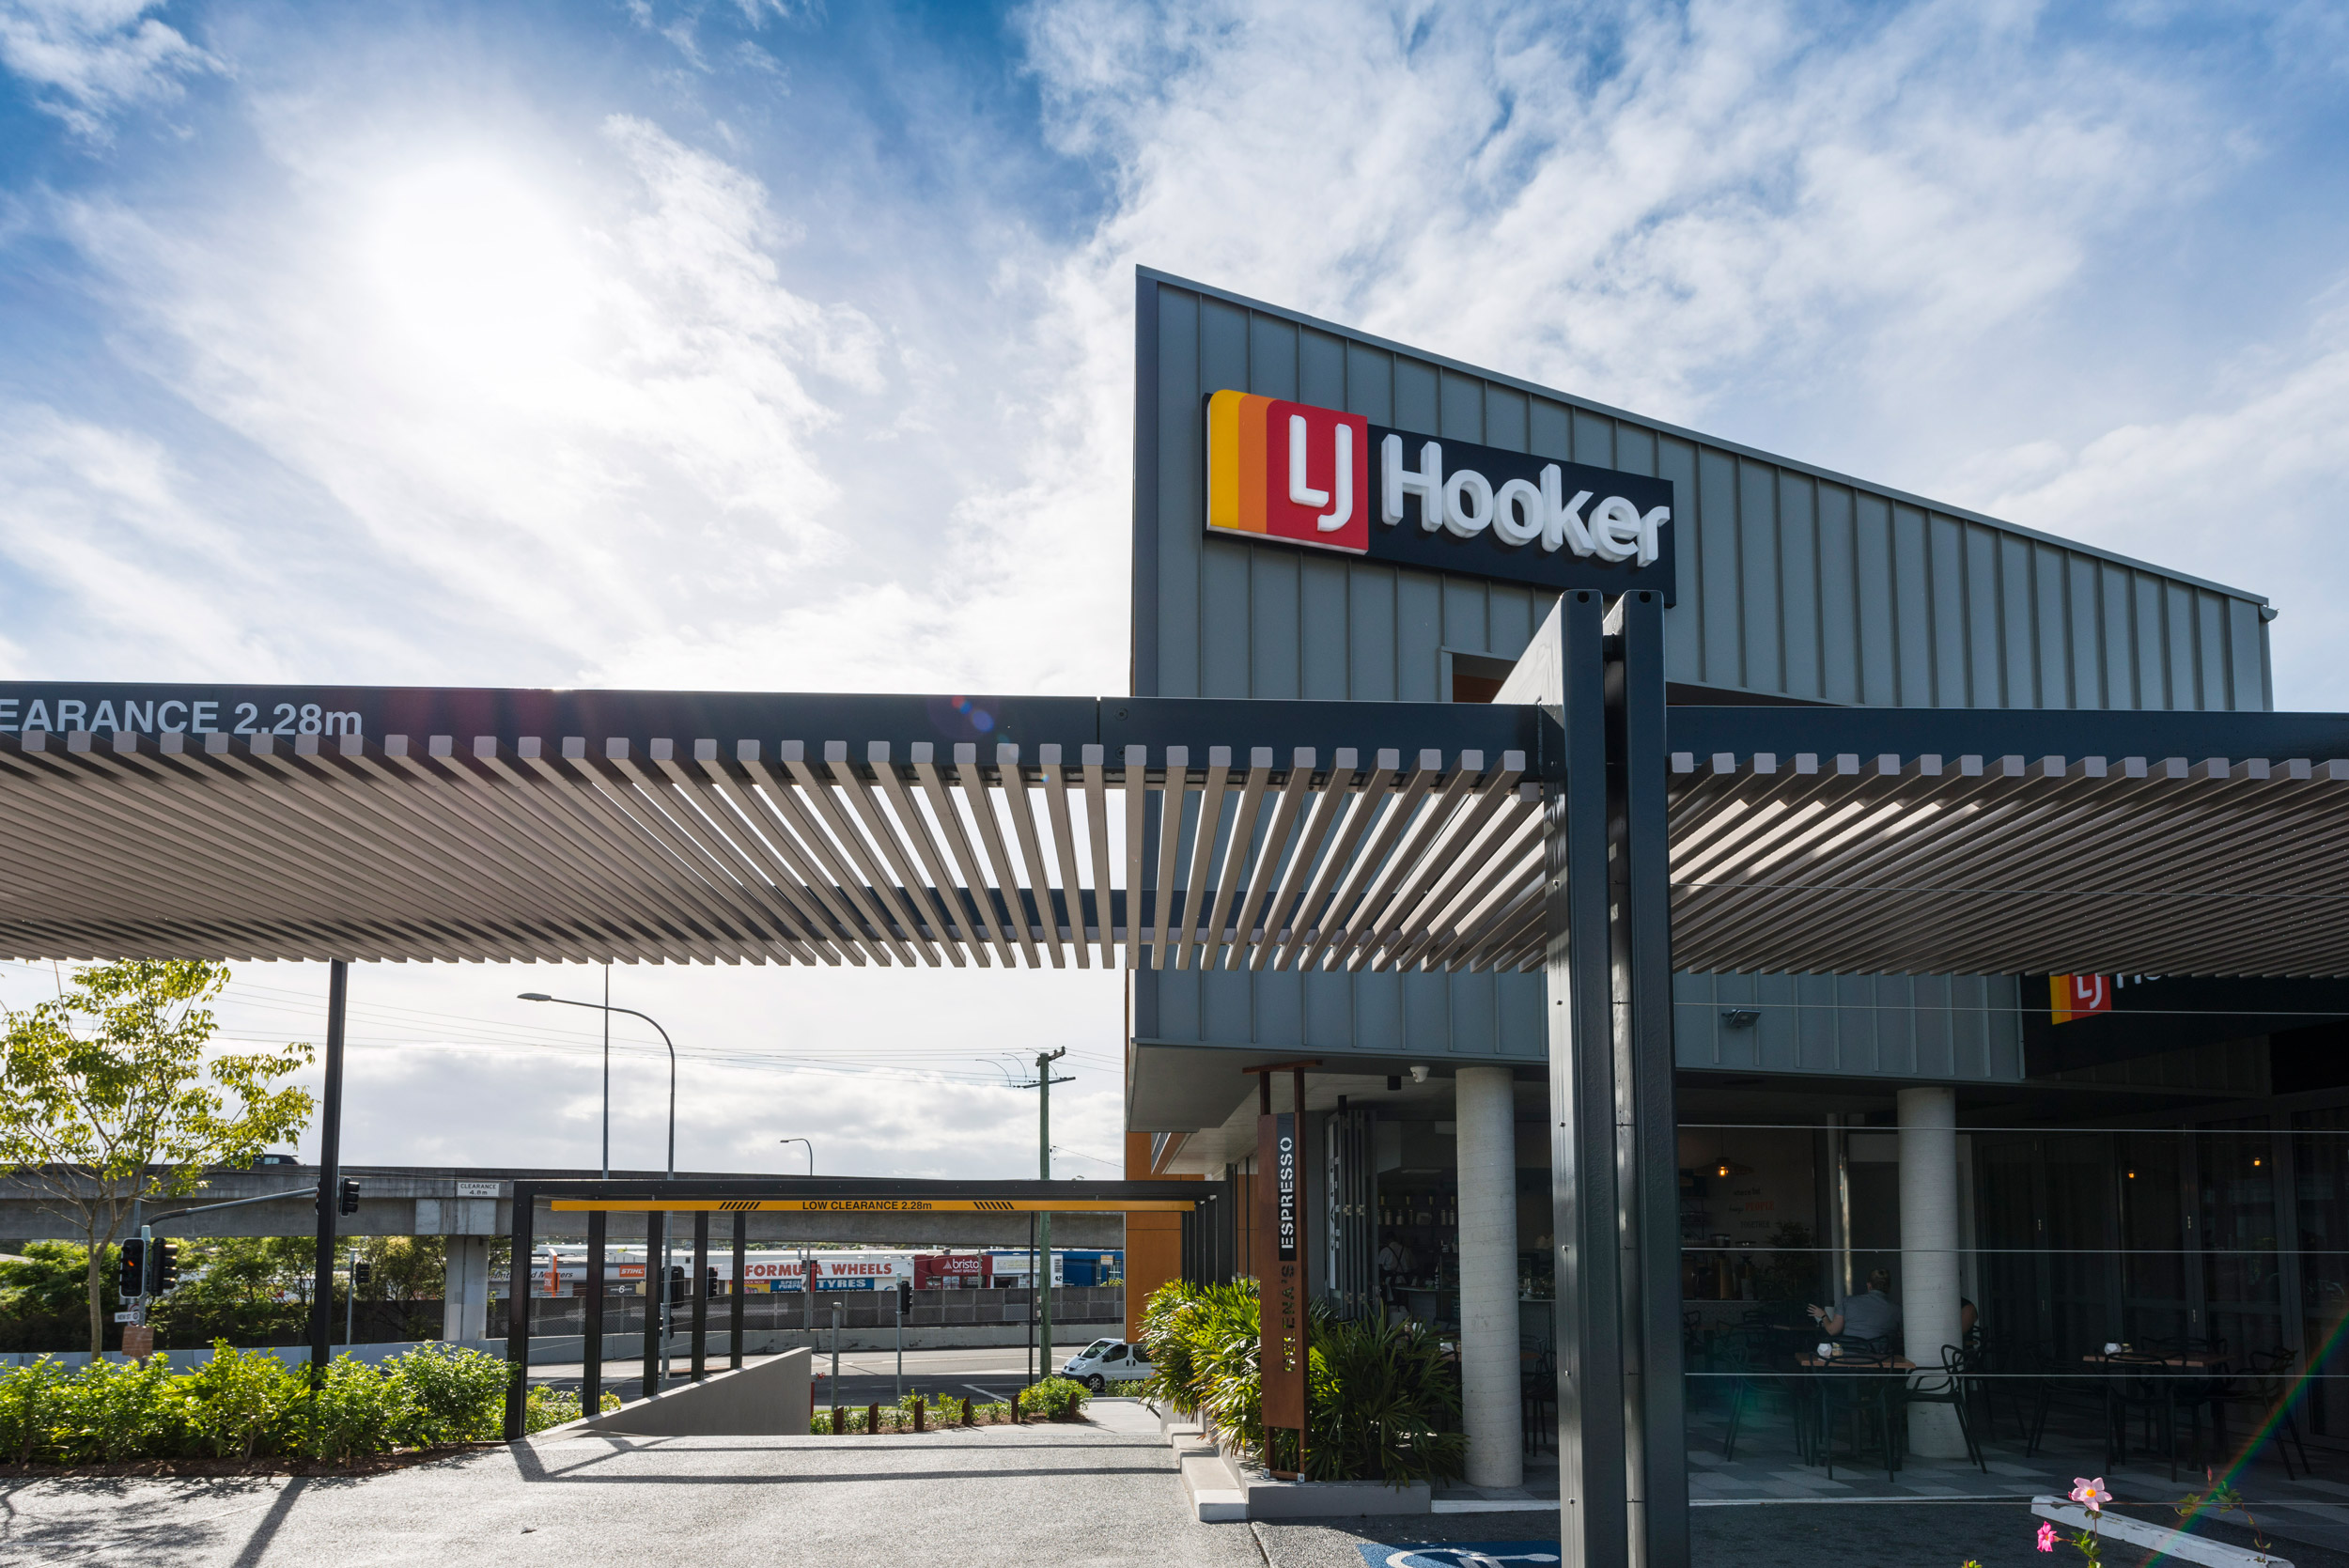 LJ Hooker - BDA Architecture - Gold Coast, Queensland